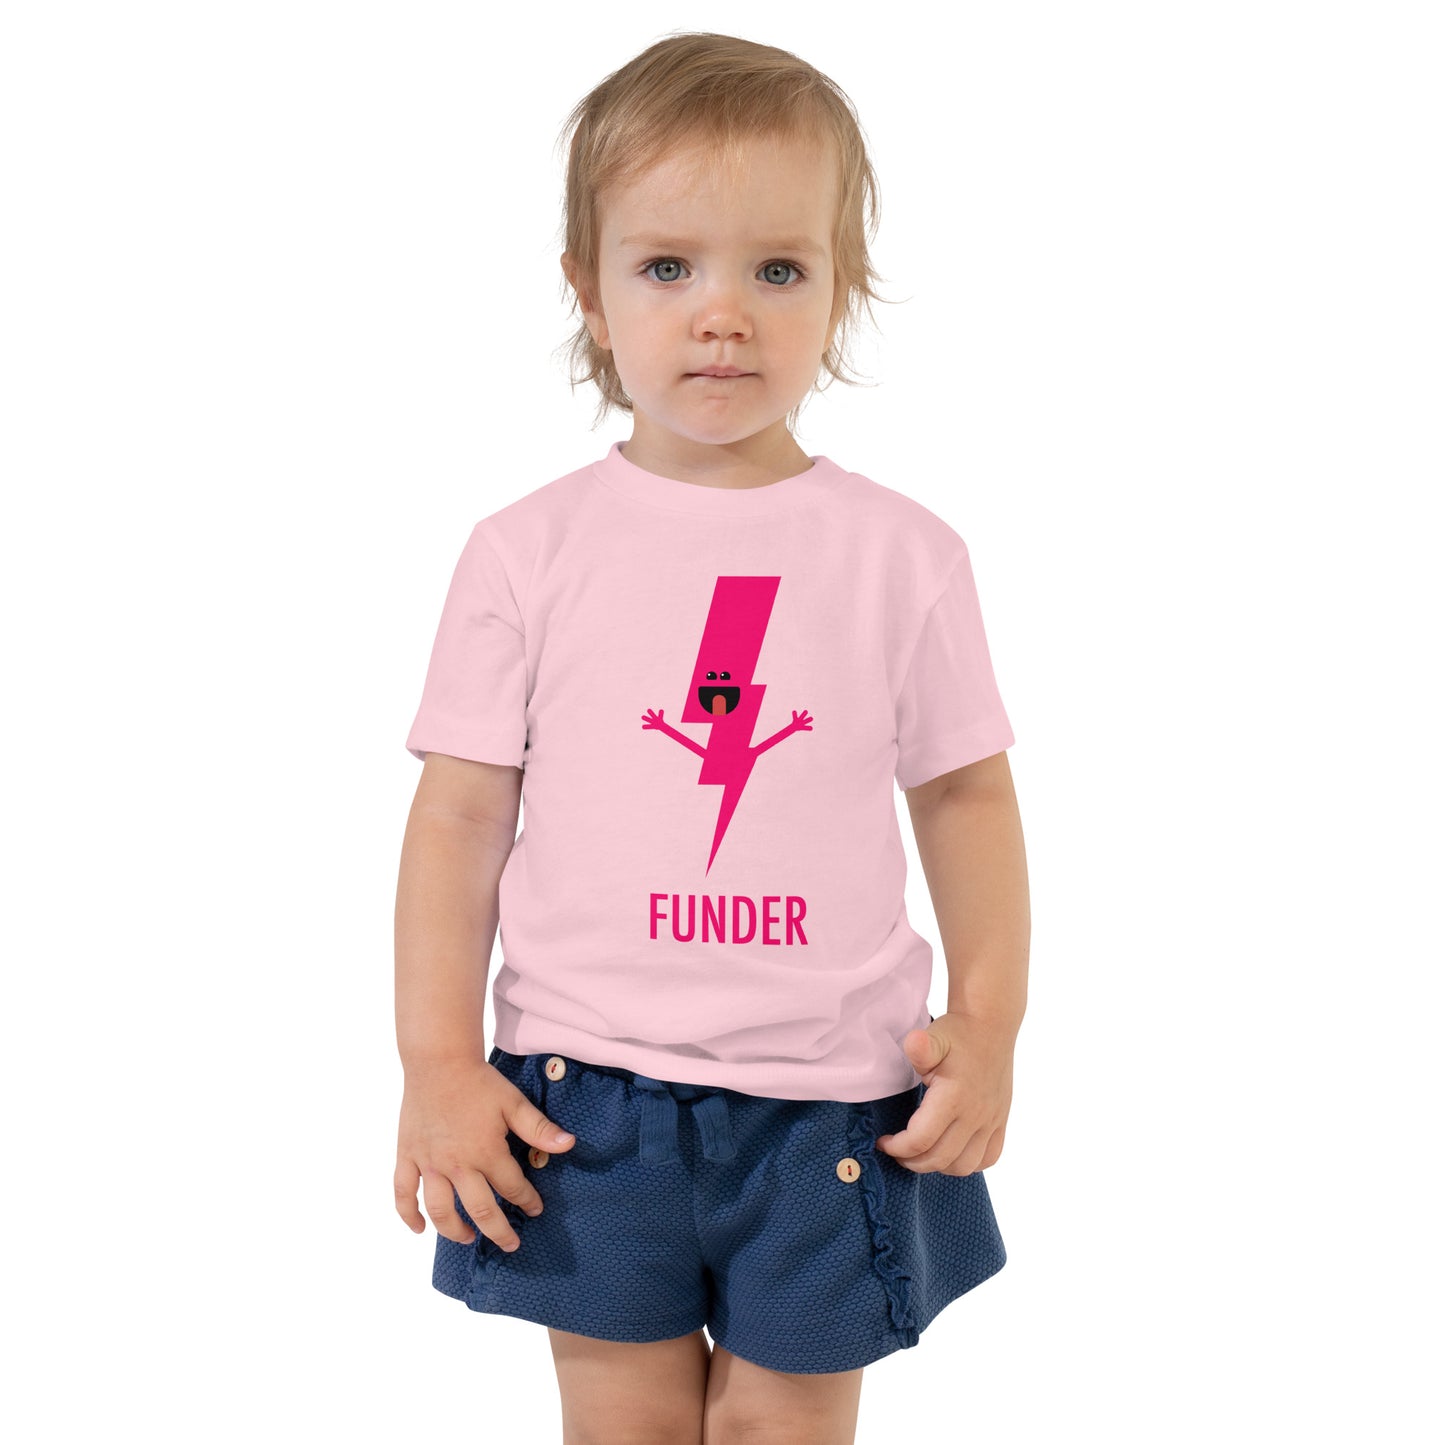 Toddler - Funder - Short Sleeve Tee